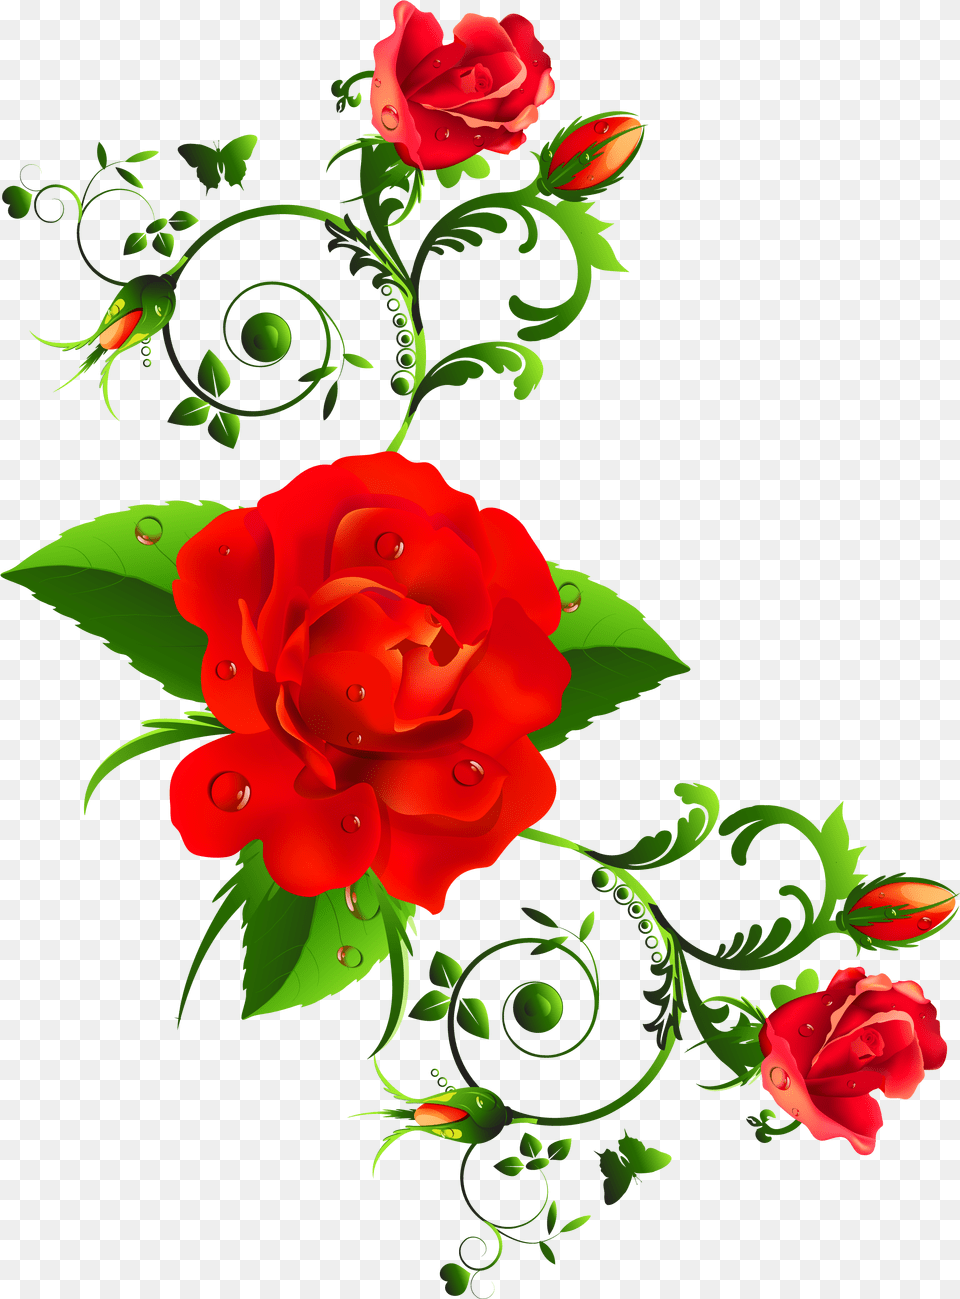 Red Flower Clipart Nice View Rosas Vermelhas Desenho, Art, Floral Design, Graphics, Pattern Png